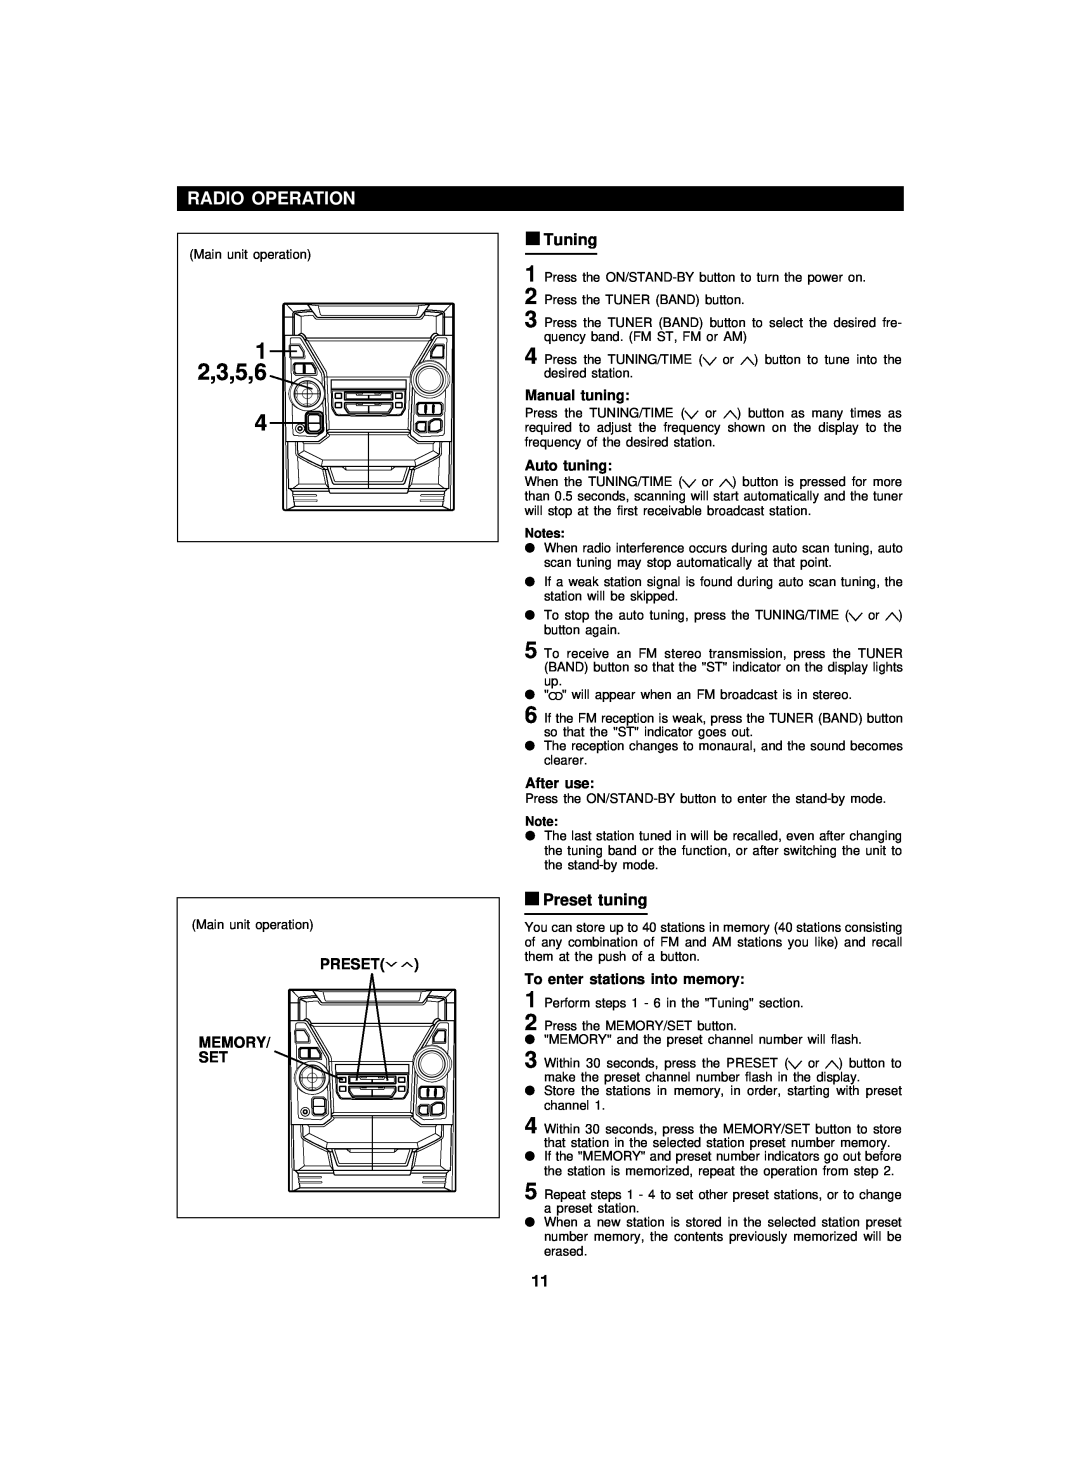 Sharp CD-BA2100 operation manual 1 2,3,5,6, Radio Operation, Preset Memory Set, Manual tuning, Auto tuning, After use 